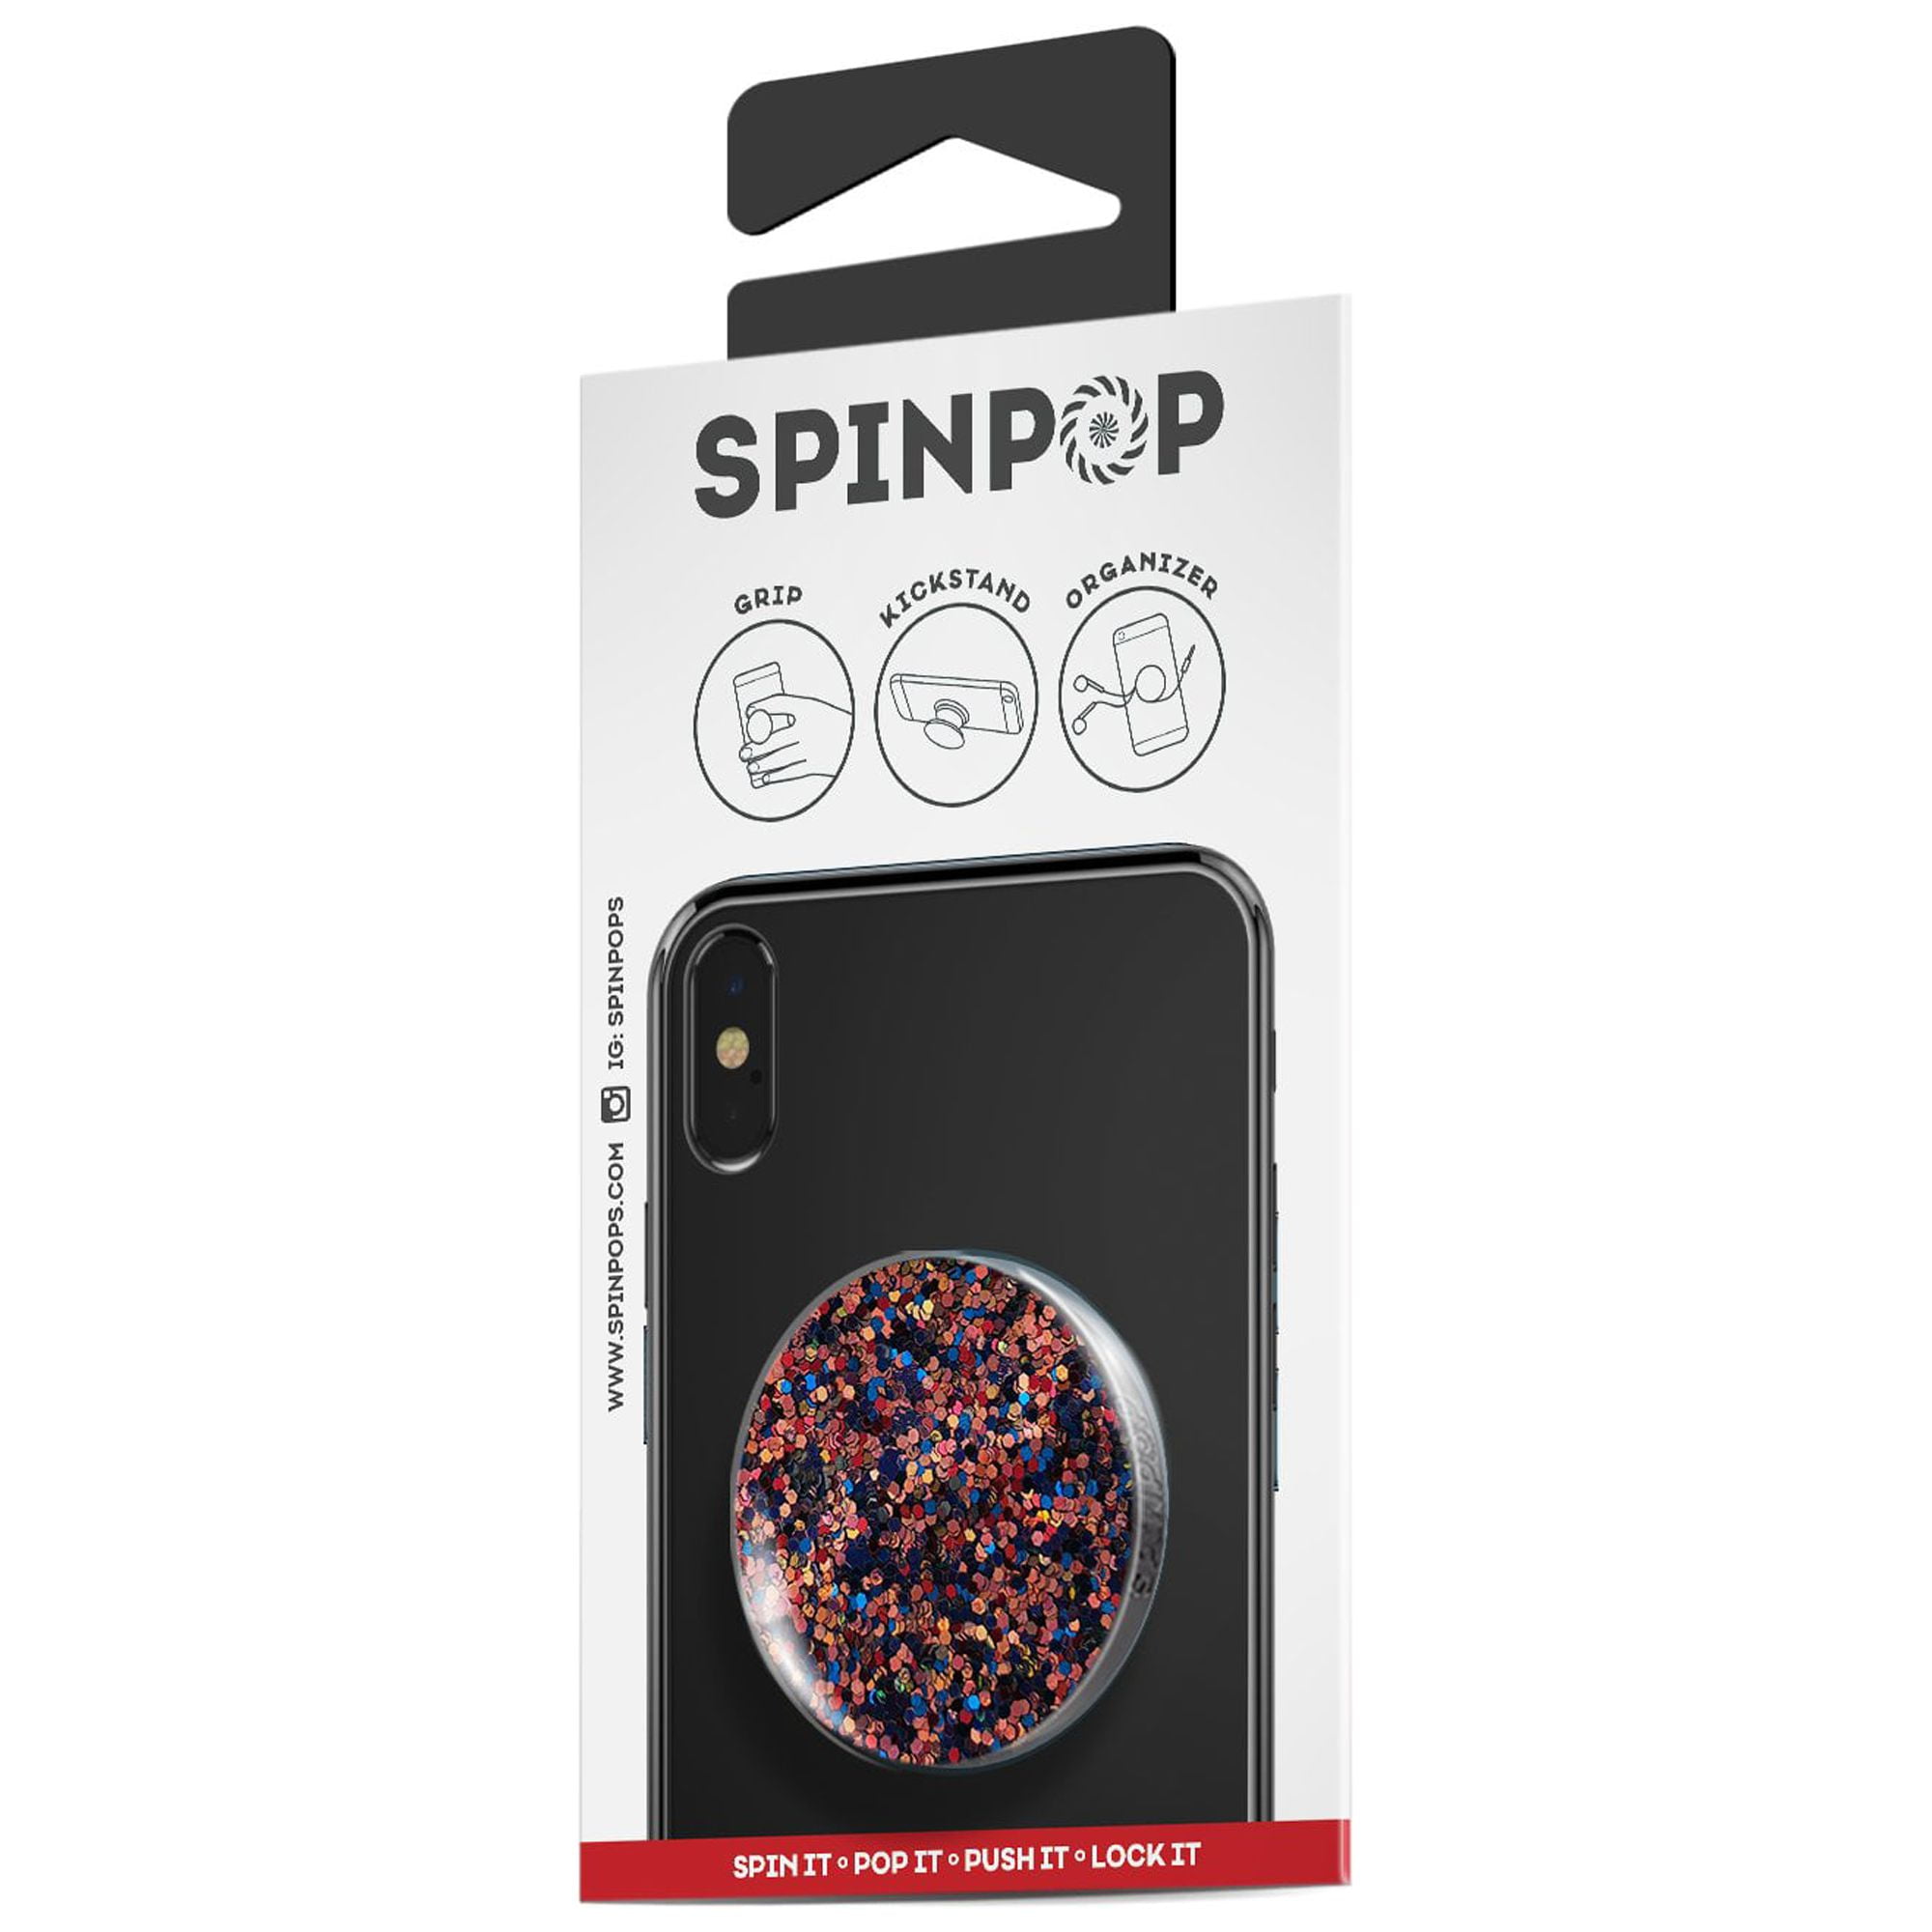  Spirograph Rainbow Spiral Geometry Mandala Flower PopSockets  Standard PopGrip : Cell Phones & Accessories